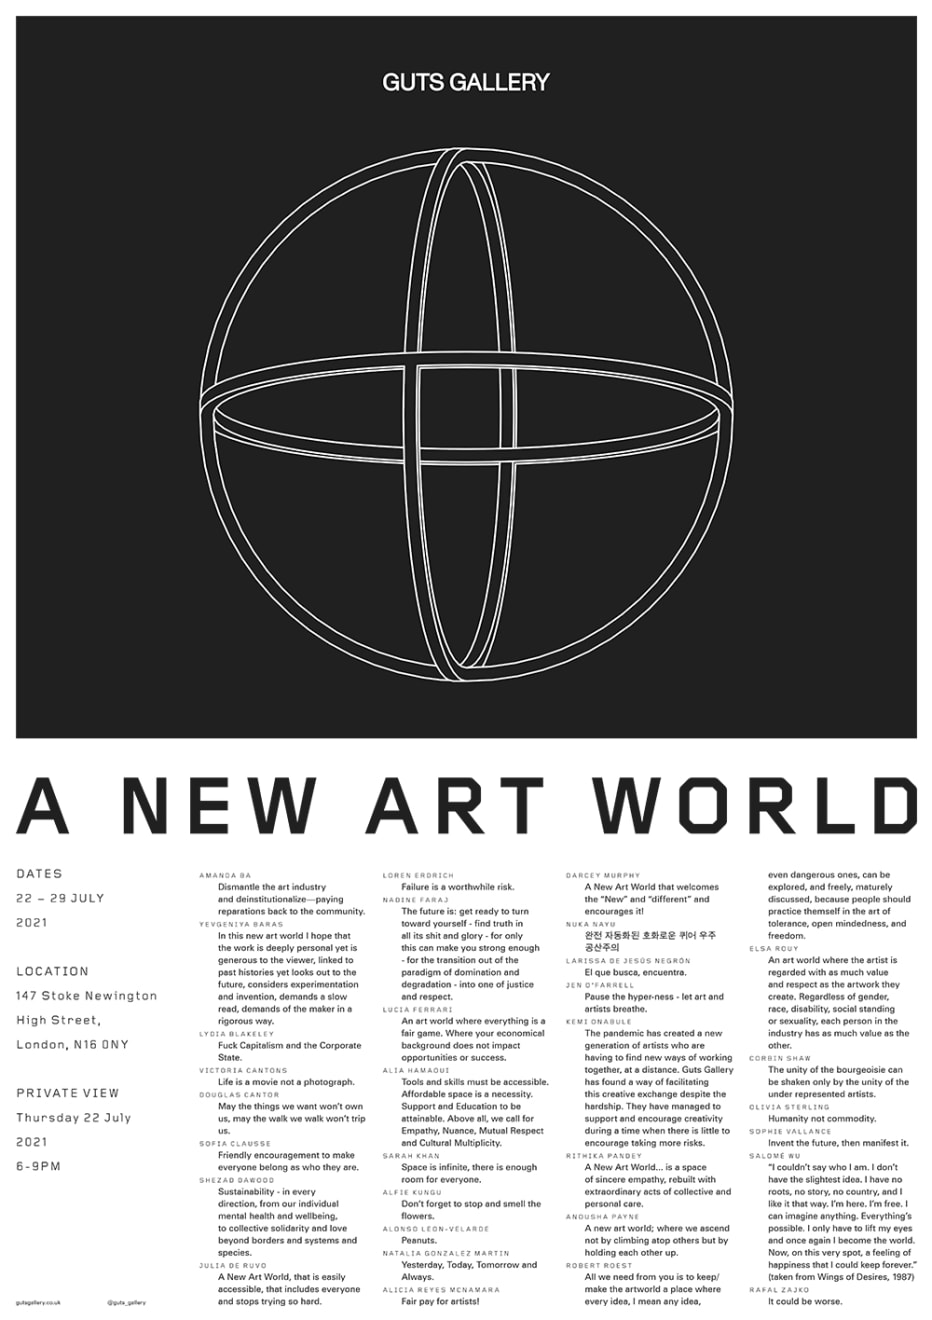 A NEW ART WORLD LIMITED EDITION MANIFESTO, 2021